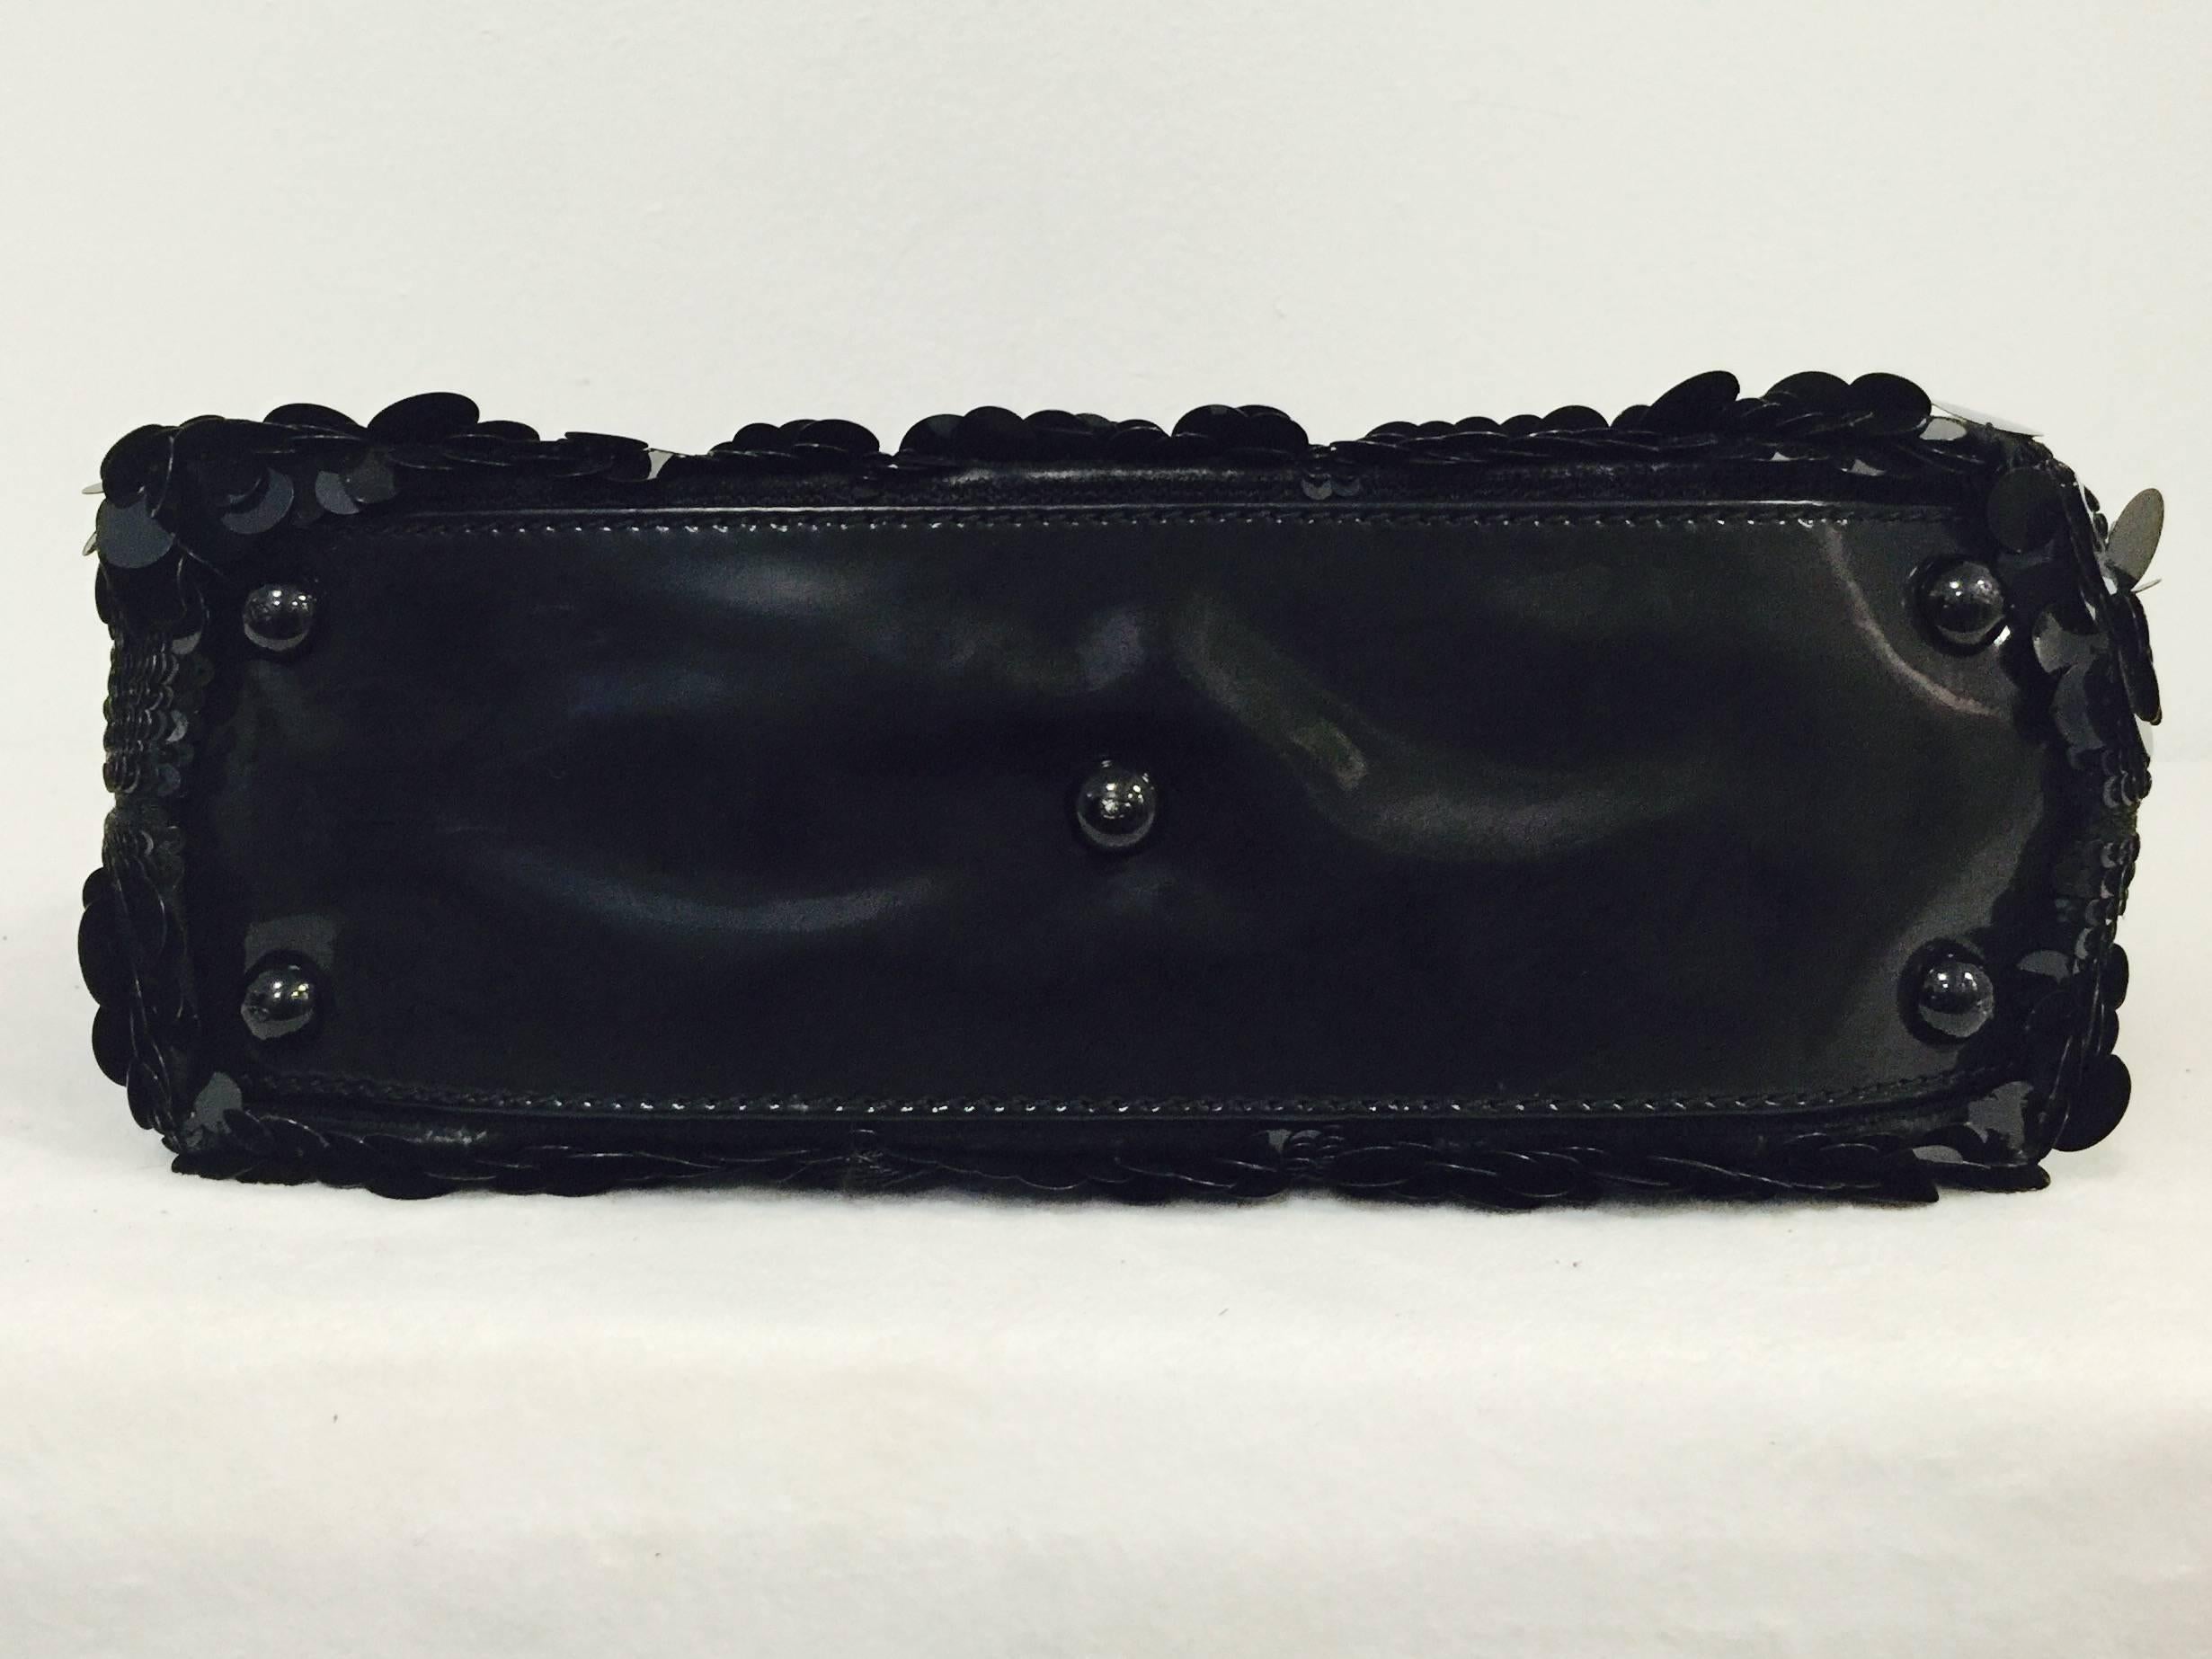  Valentino Garavani Sequined Shoulder Bag with Patent Trim  1